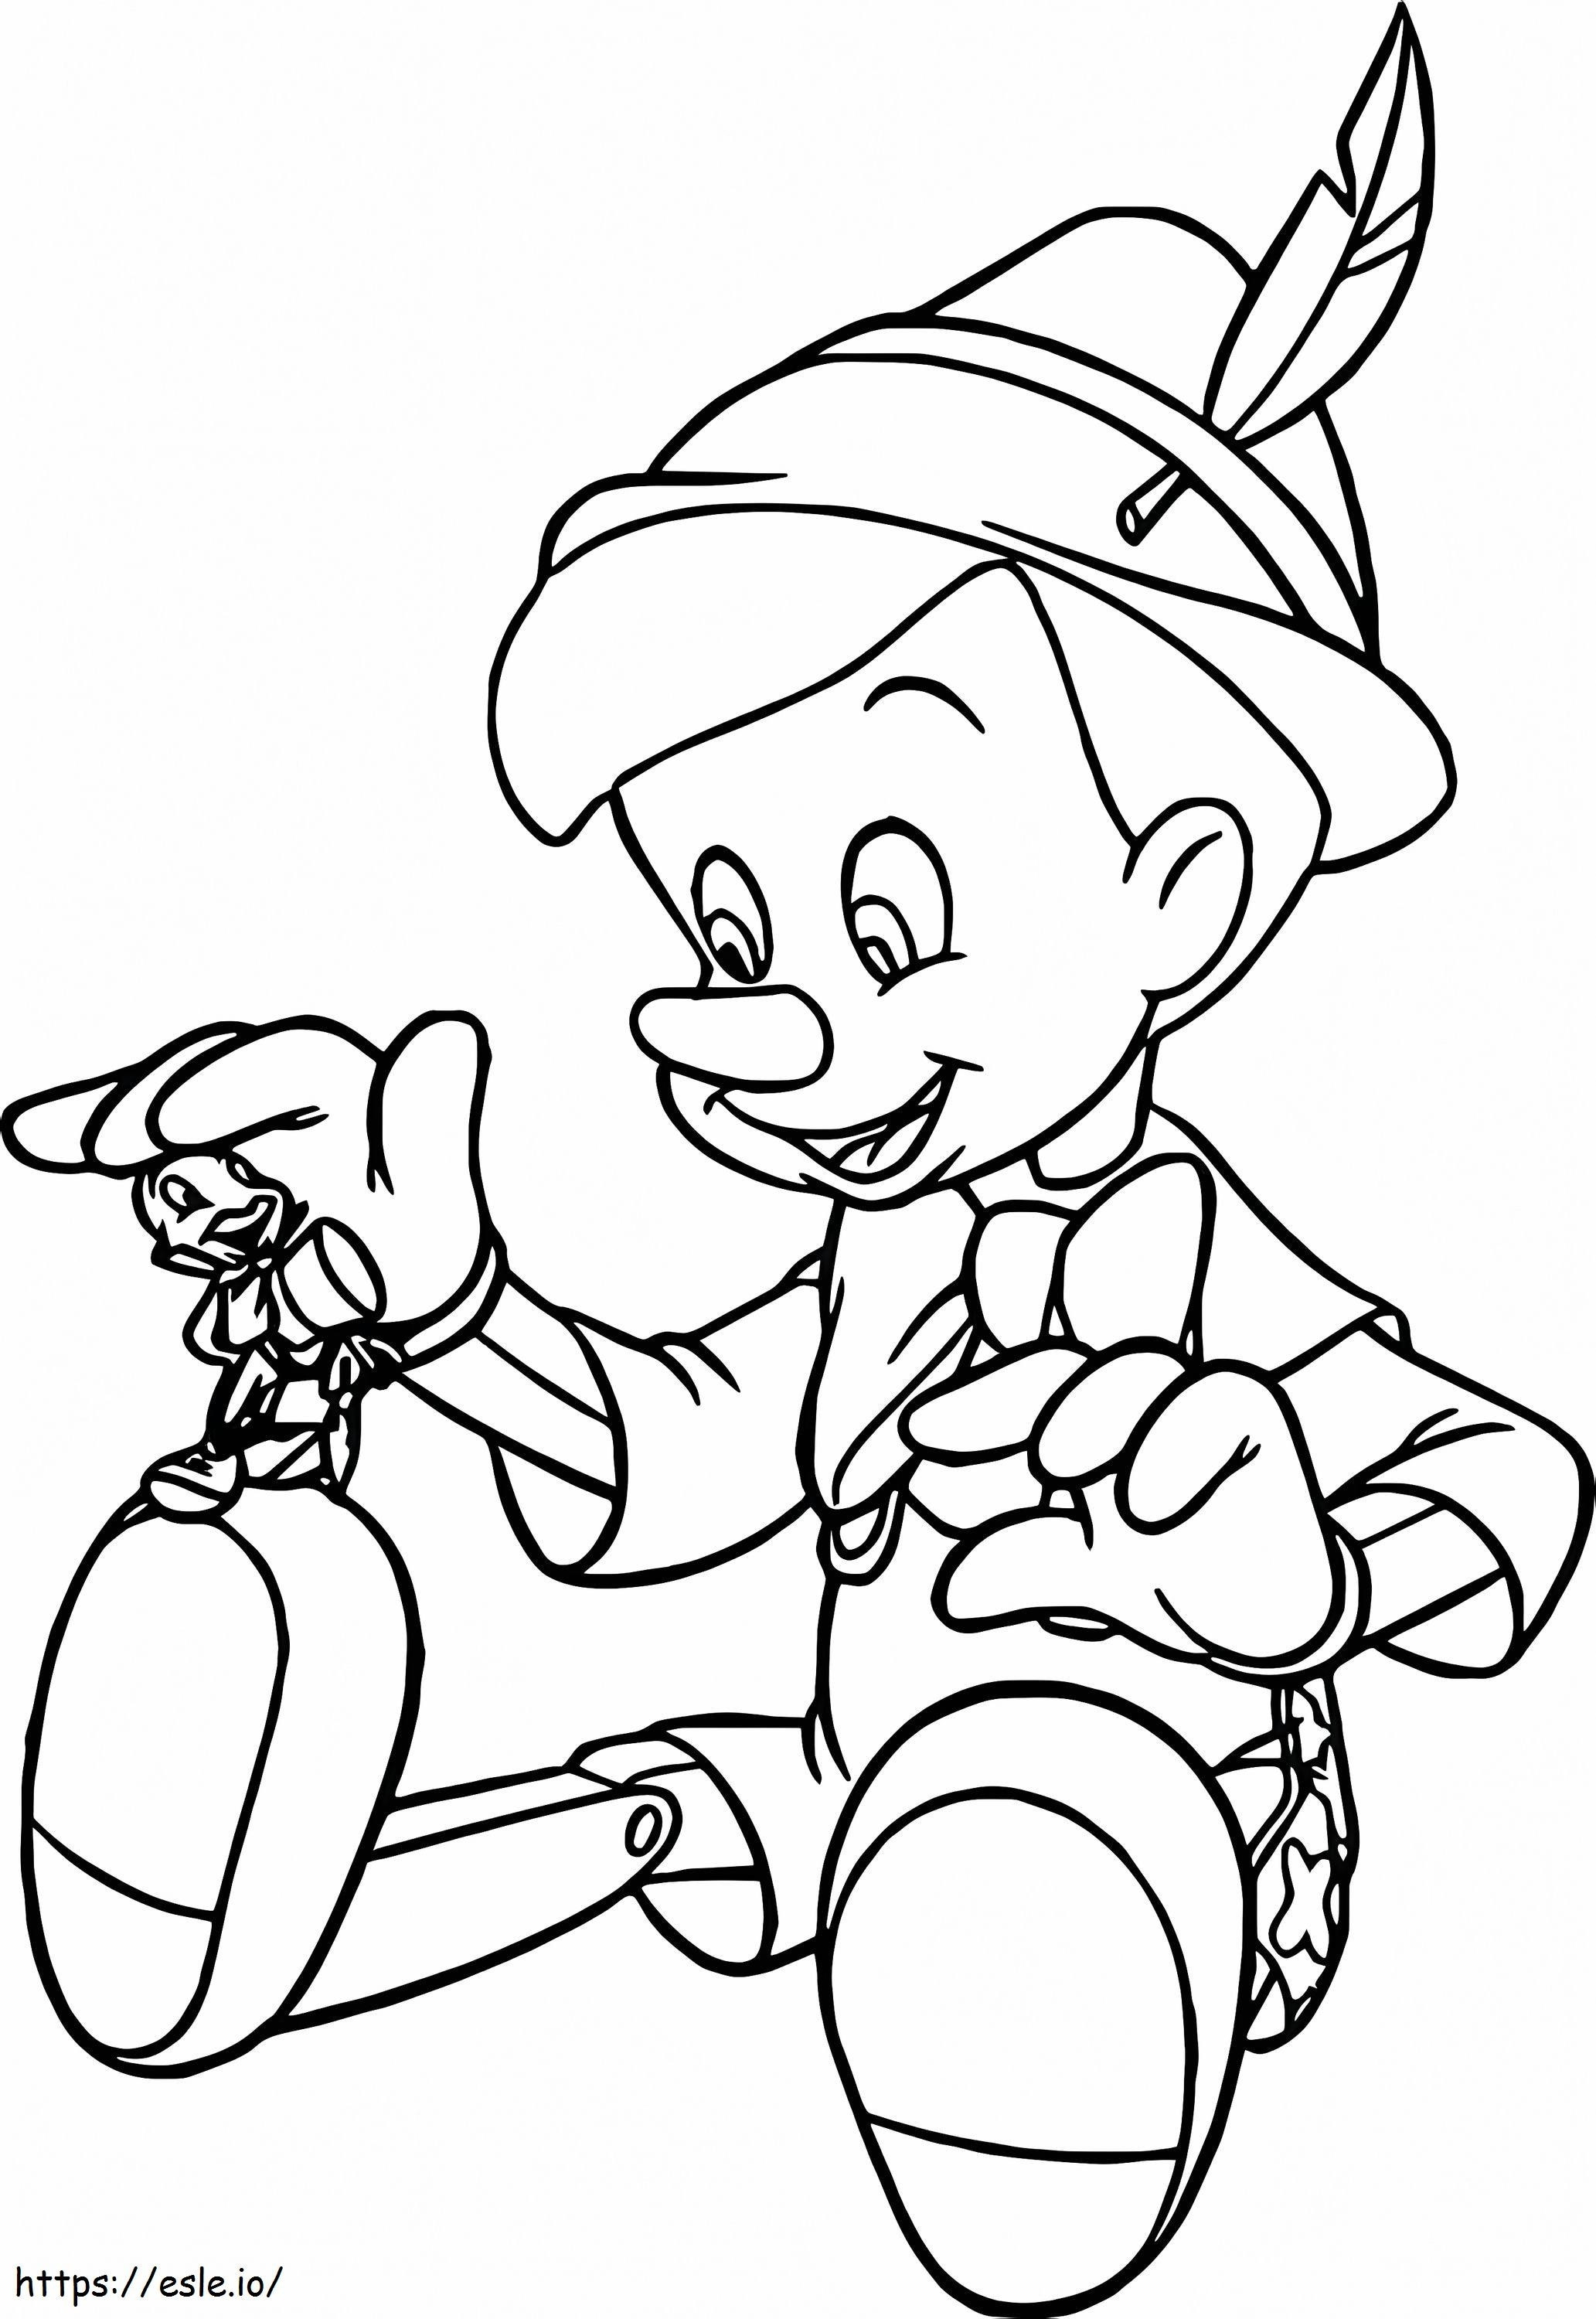 Jiminy und Pinocchio ausmalbilder